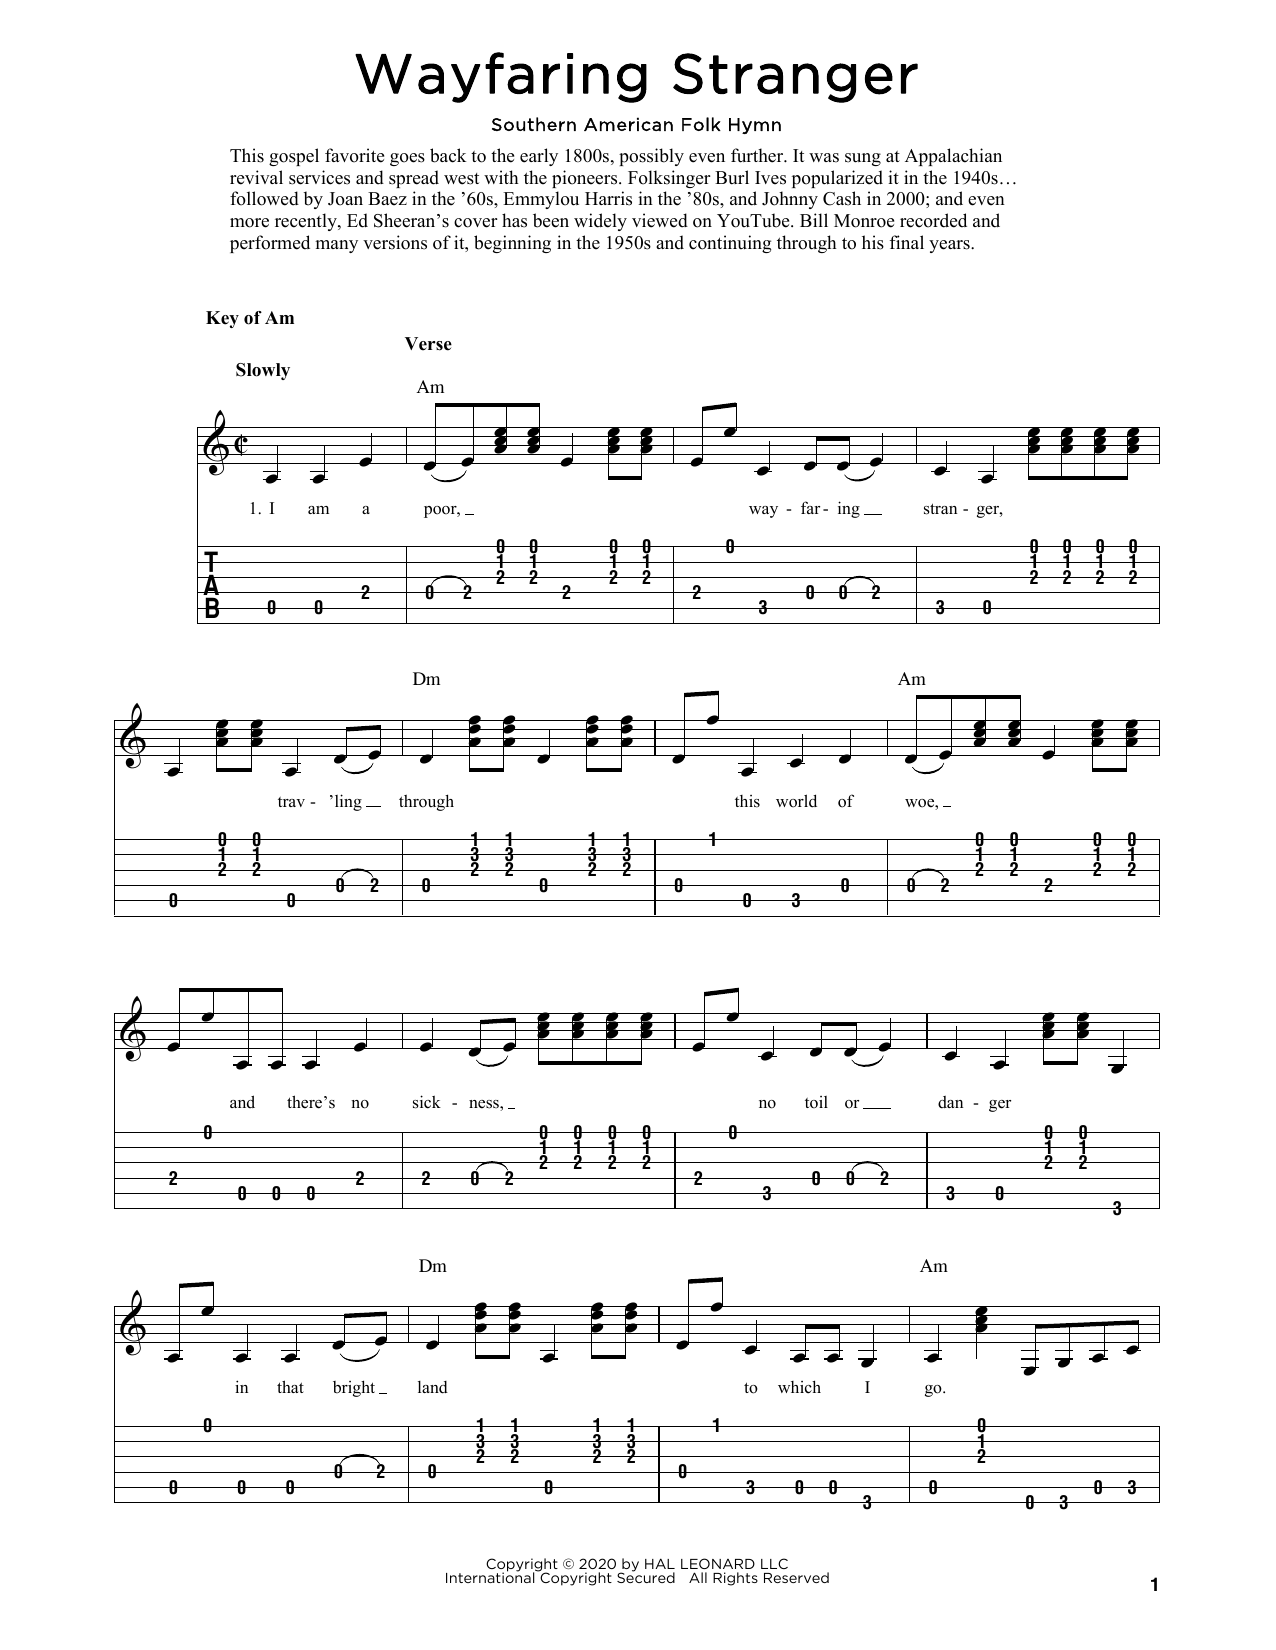 Southern American Folk Hymn Wayfaring Stranger (arr. Fred Sokolow) Sheet Music Notes & Chords for Banjo Tab - Download or Print PDF